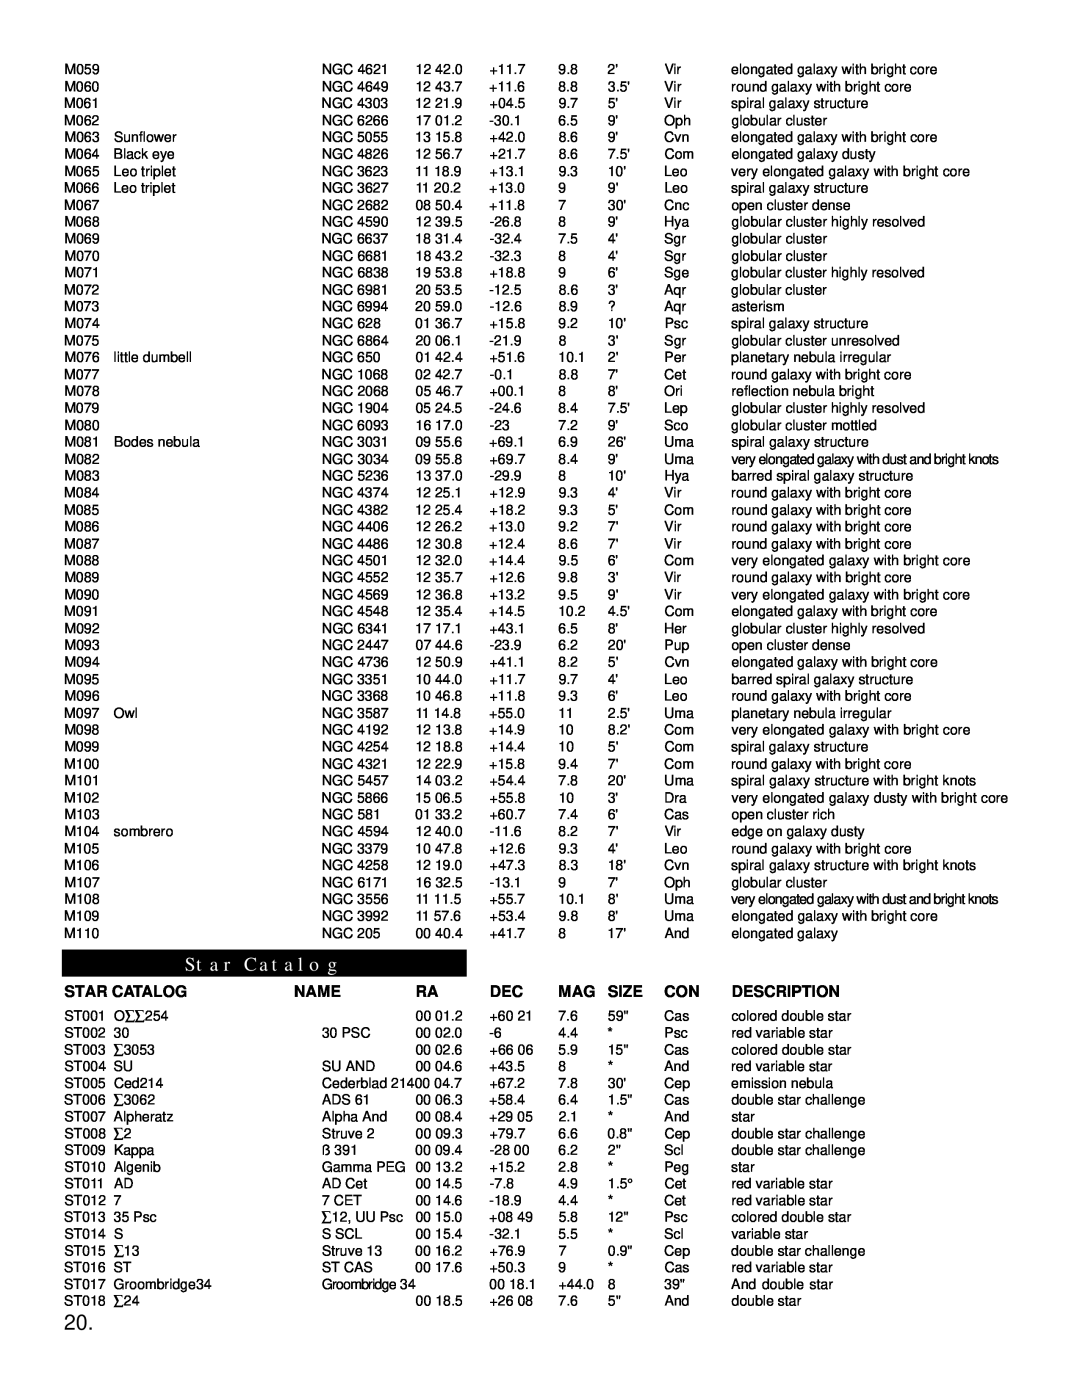 Bushnell 78-8830 instruction manual Star Catalog, Name, Size, Description 